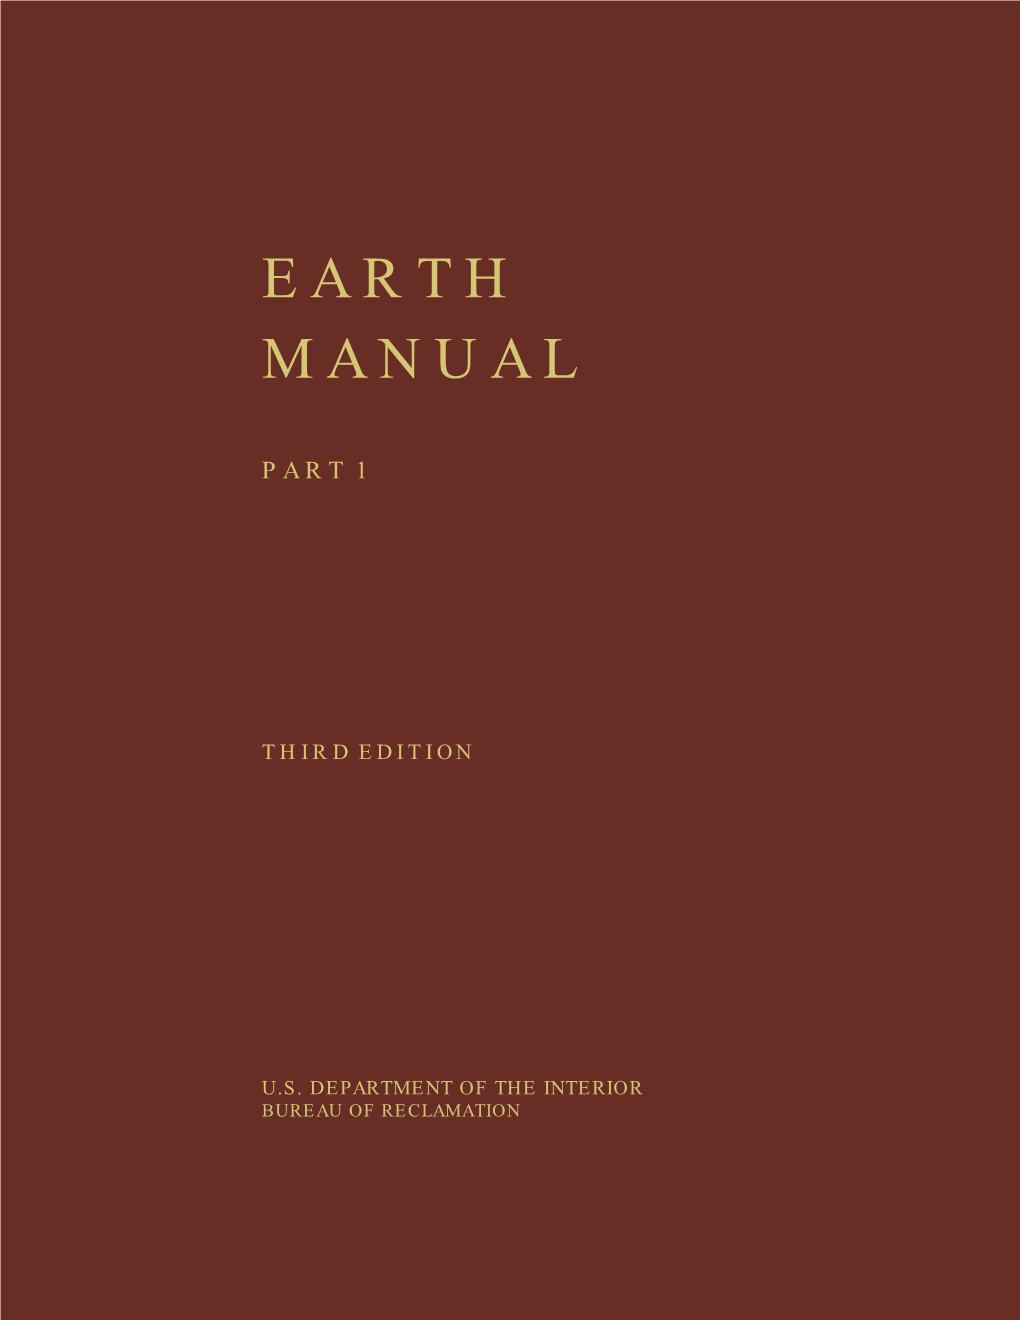 Earth Manual